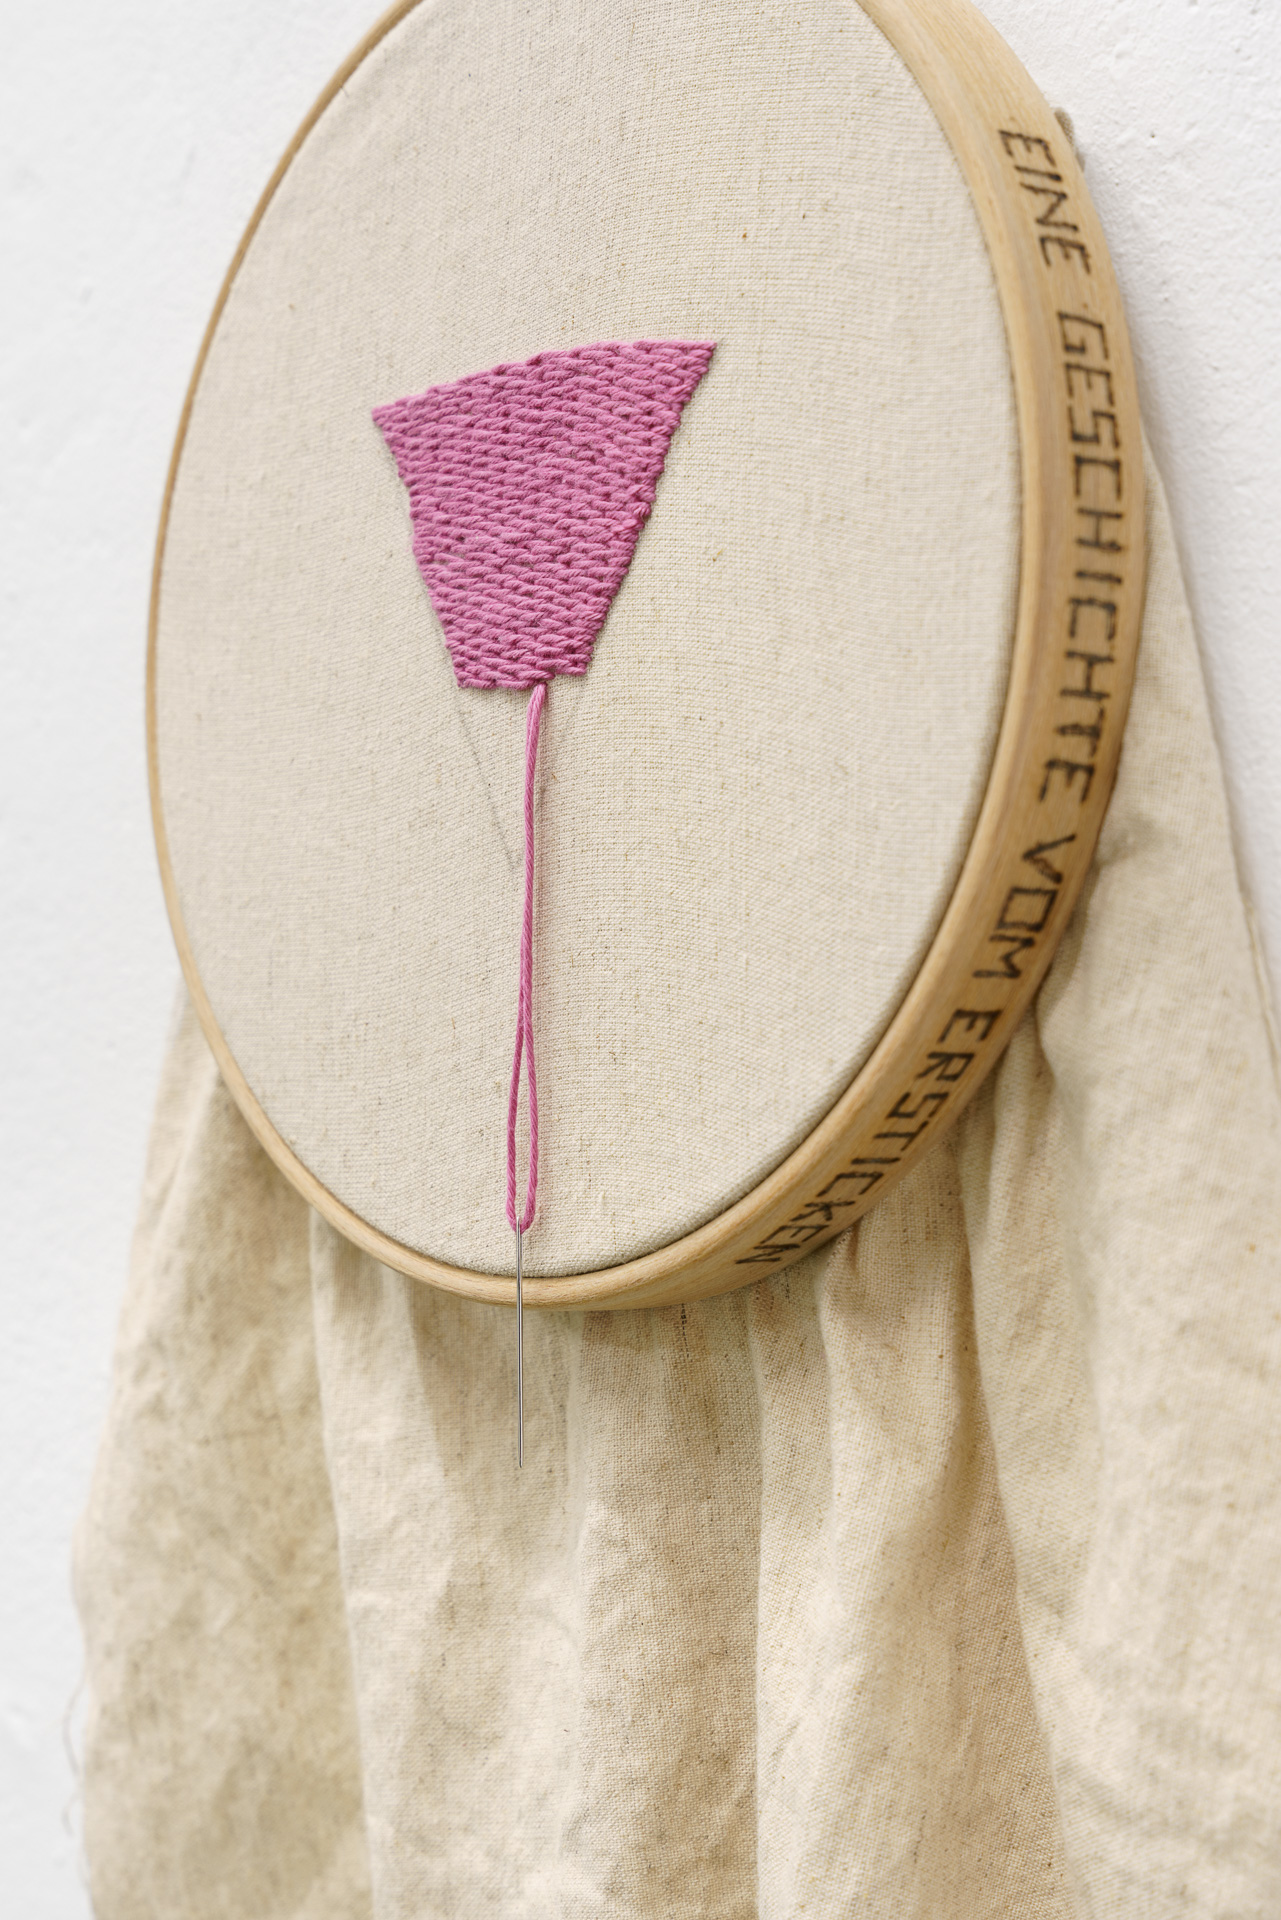 Er stickt, detail, embroidery hoop, linen, needle, thread, engraving, 35 x 25 cm, 2023